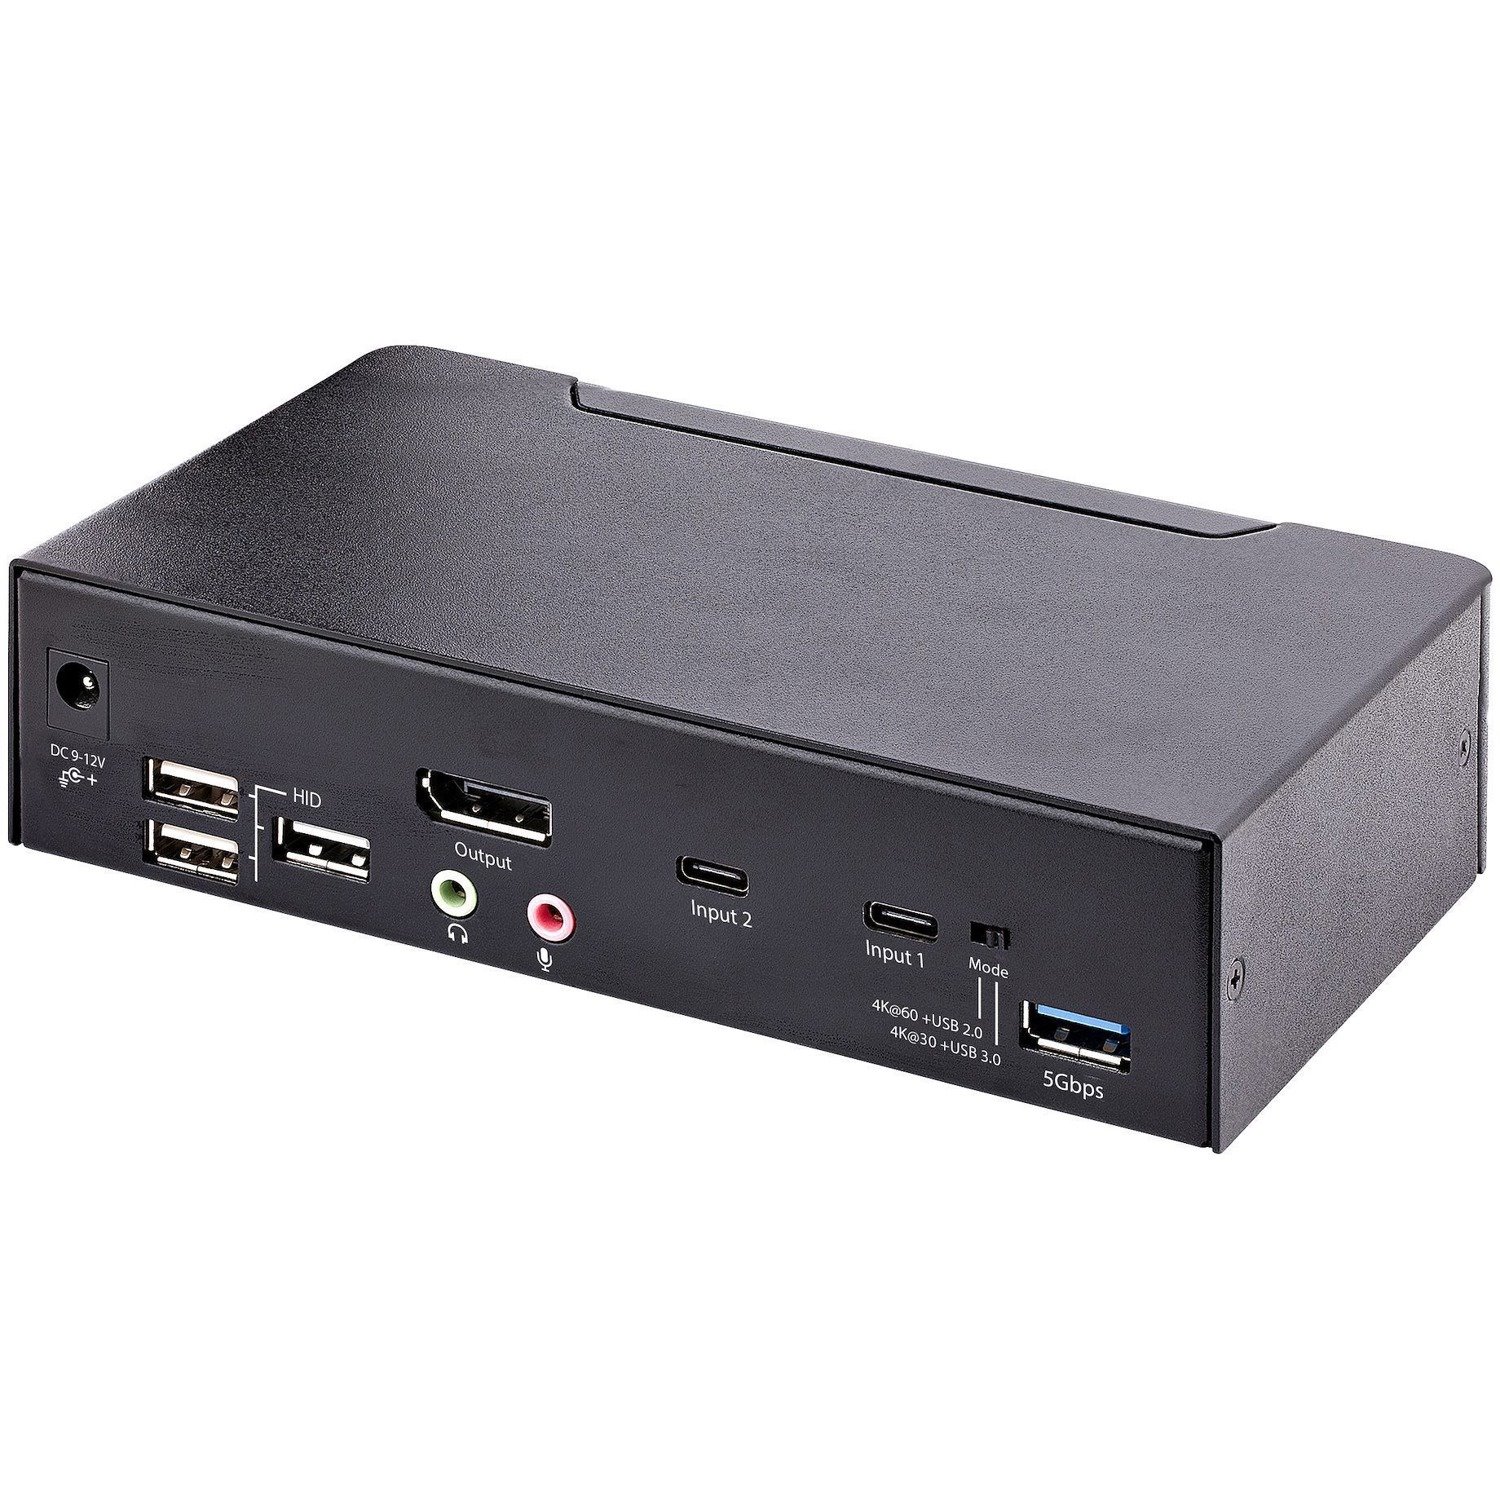 StarTech.com USB-C KVM Switch, 2 Port DisplayPort KVM w/ 4K 60Hz UHD HDR Video, 3.5mm Audio, USB Type-C KVM Switch, 6x USB Hub Ports, Thunderbolt 3/4 Compatible - Hot Key Switching